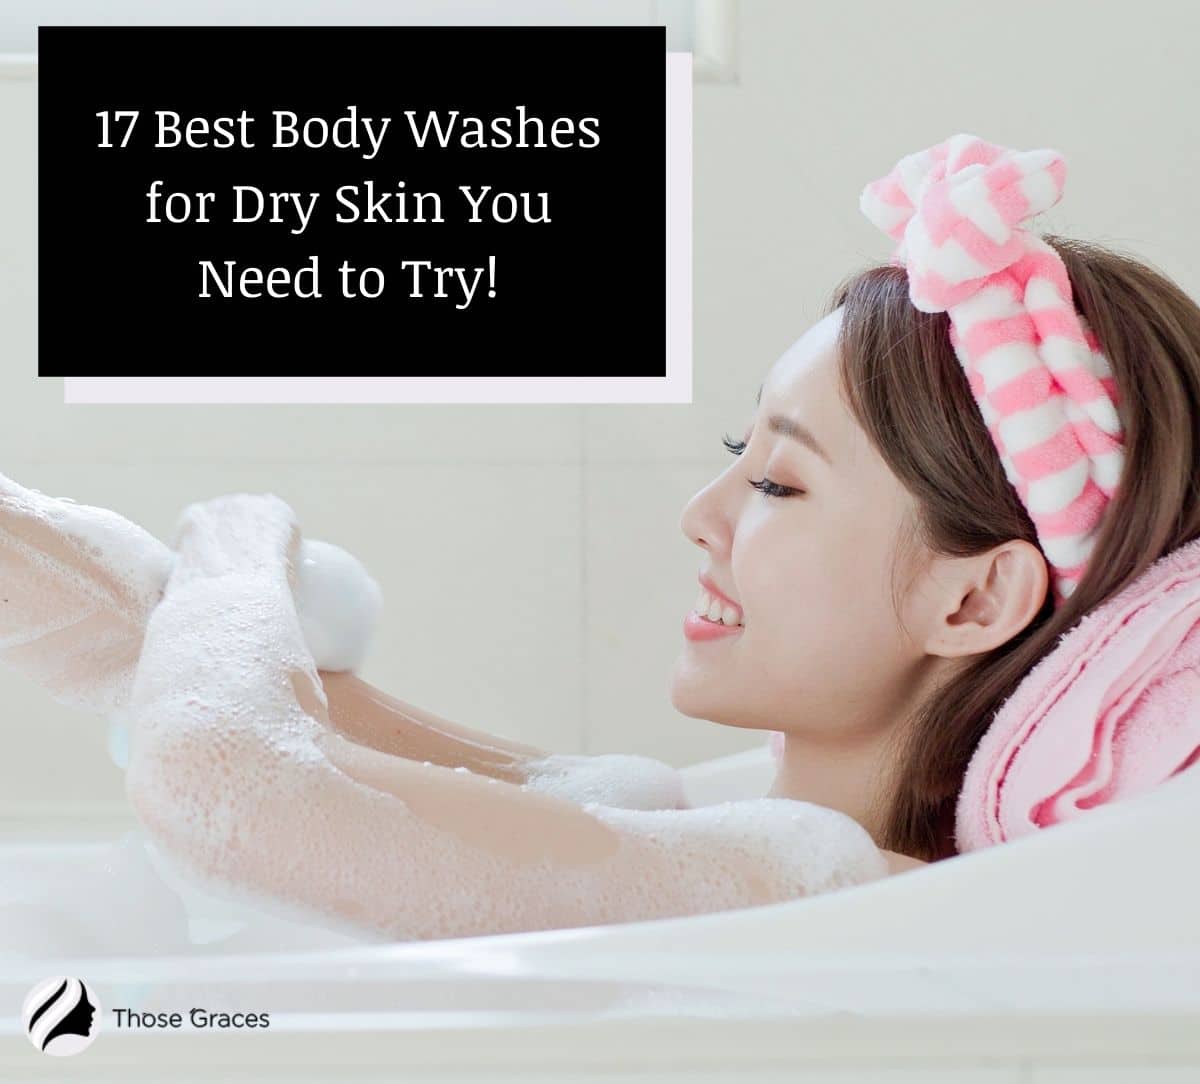 Korean girl enjoying taking a bath using the best body wash for dry skin